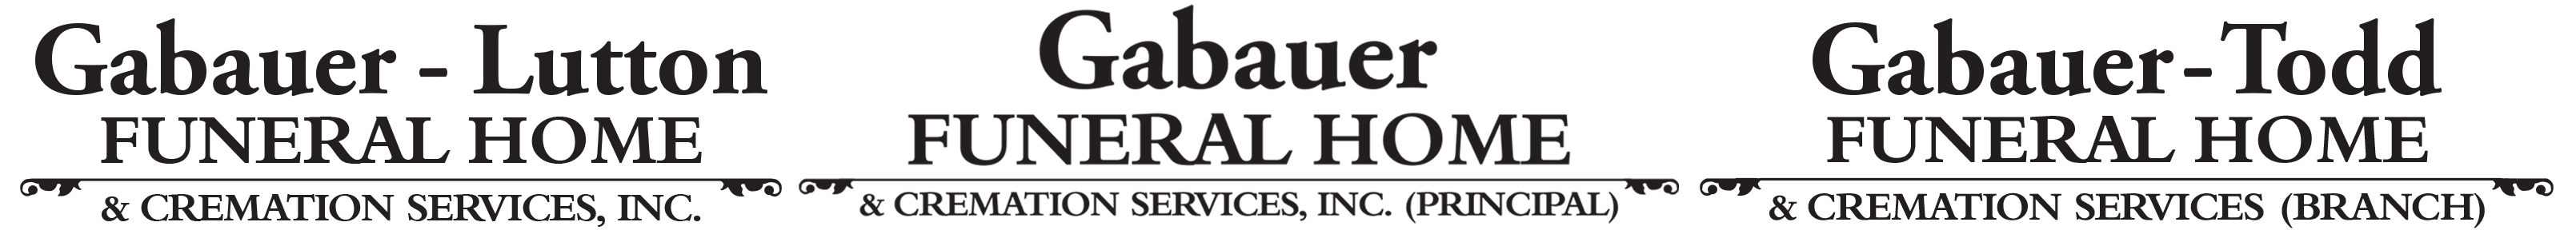 Gabauer-Funeral-Homes-Logos-Multiple